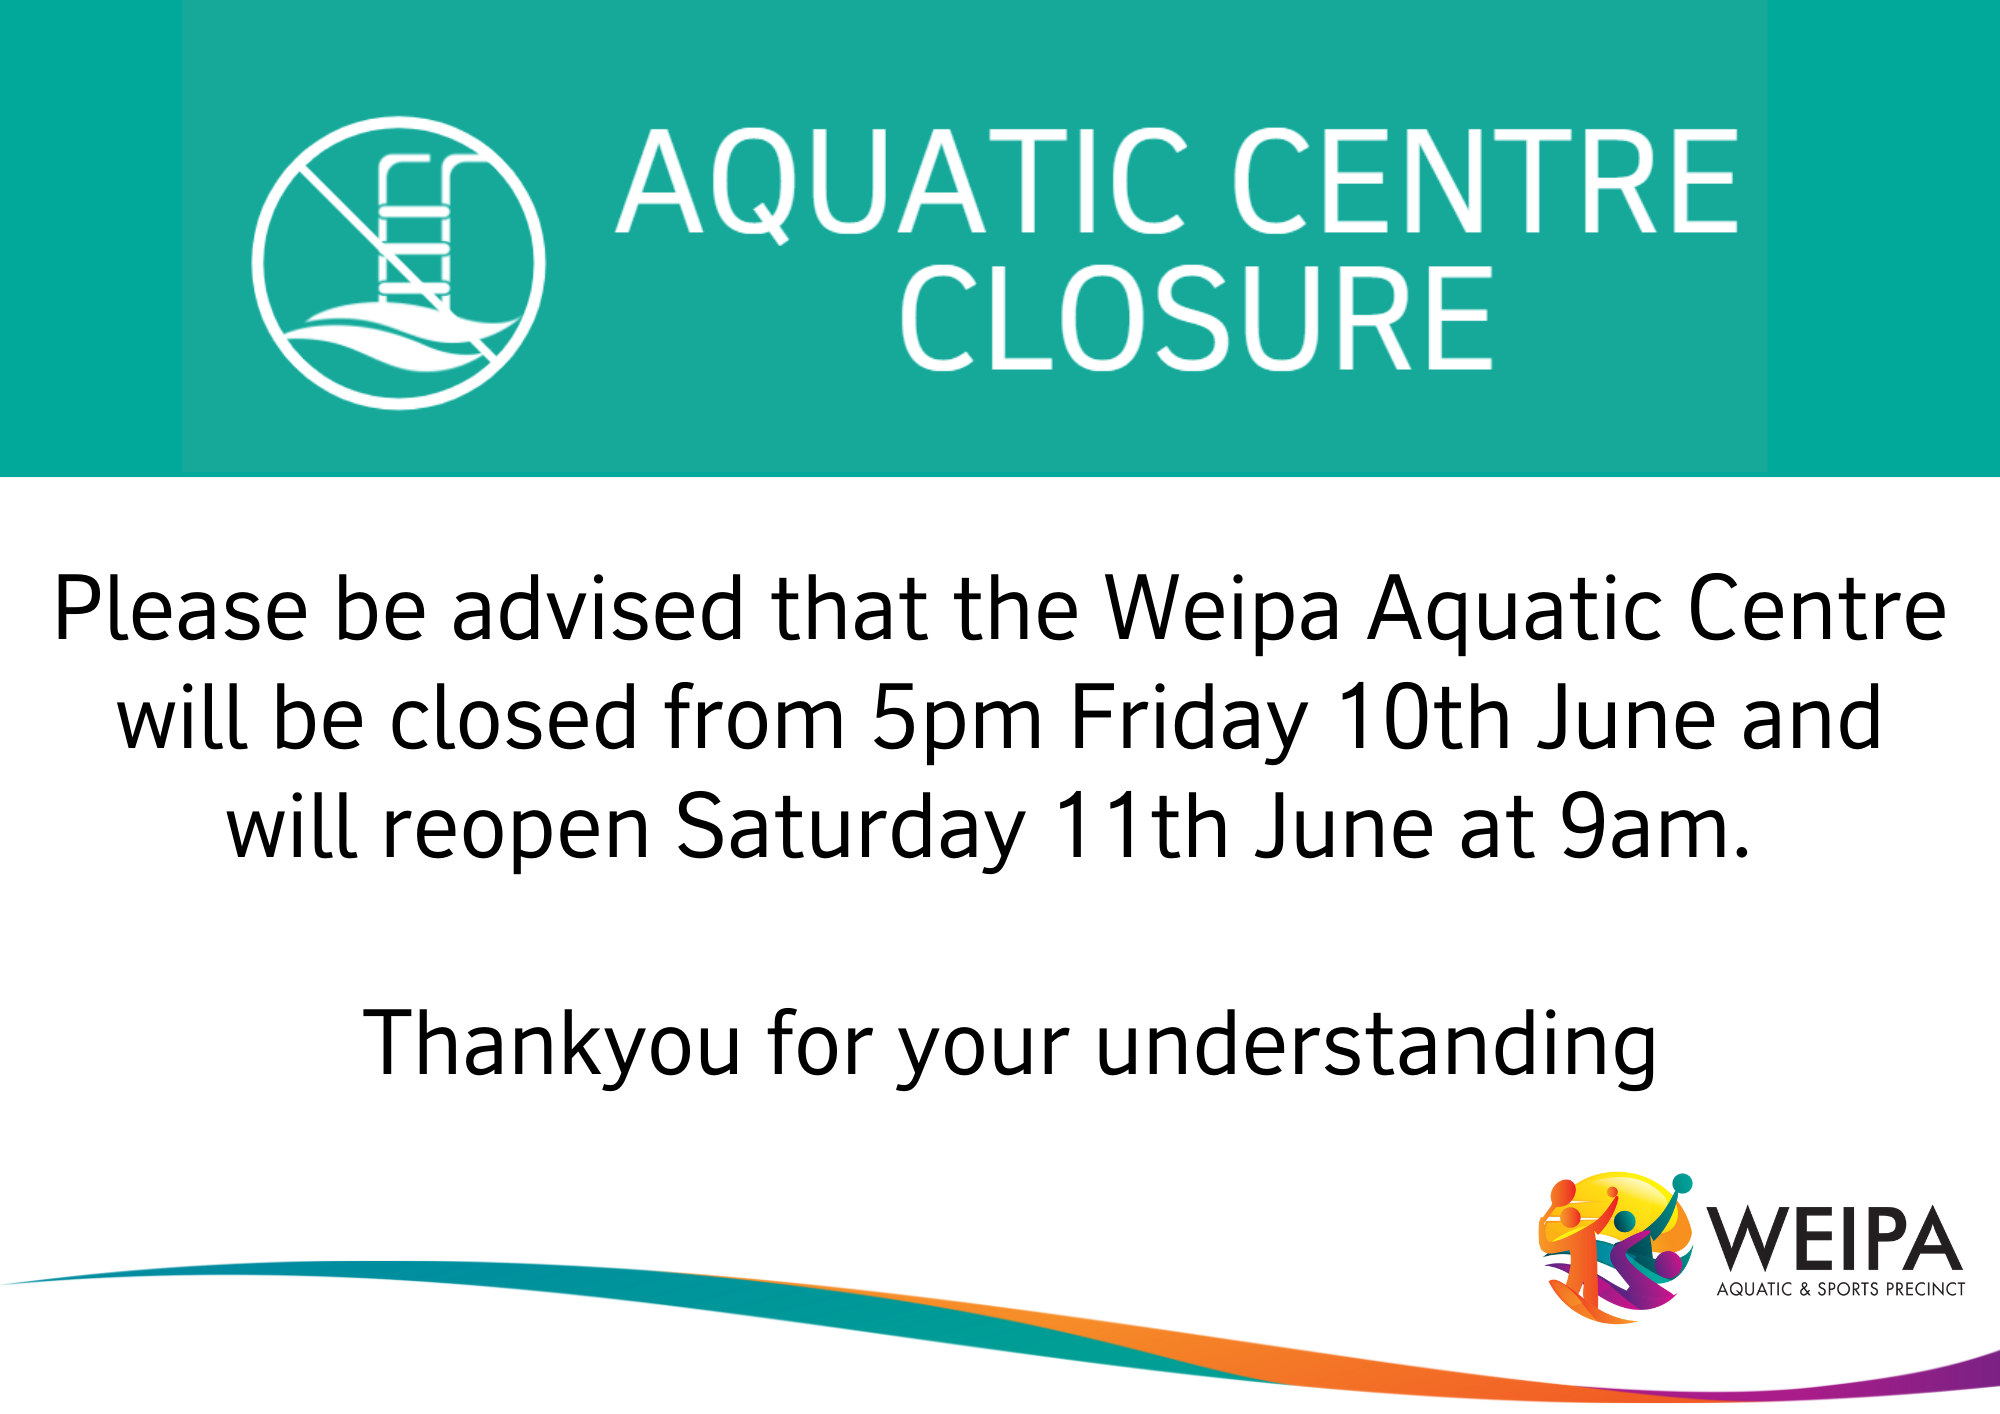 Closure of Aquatic Centre